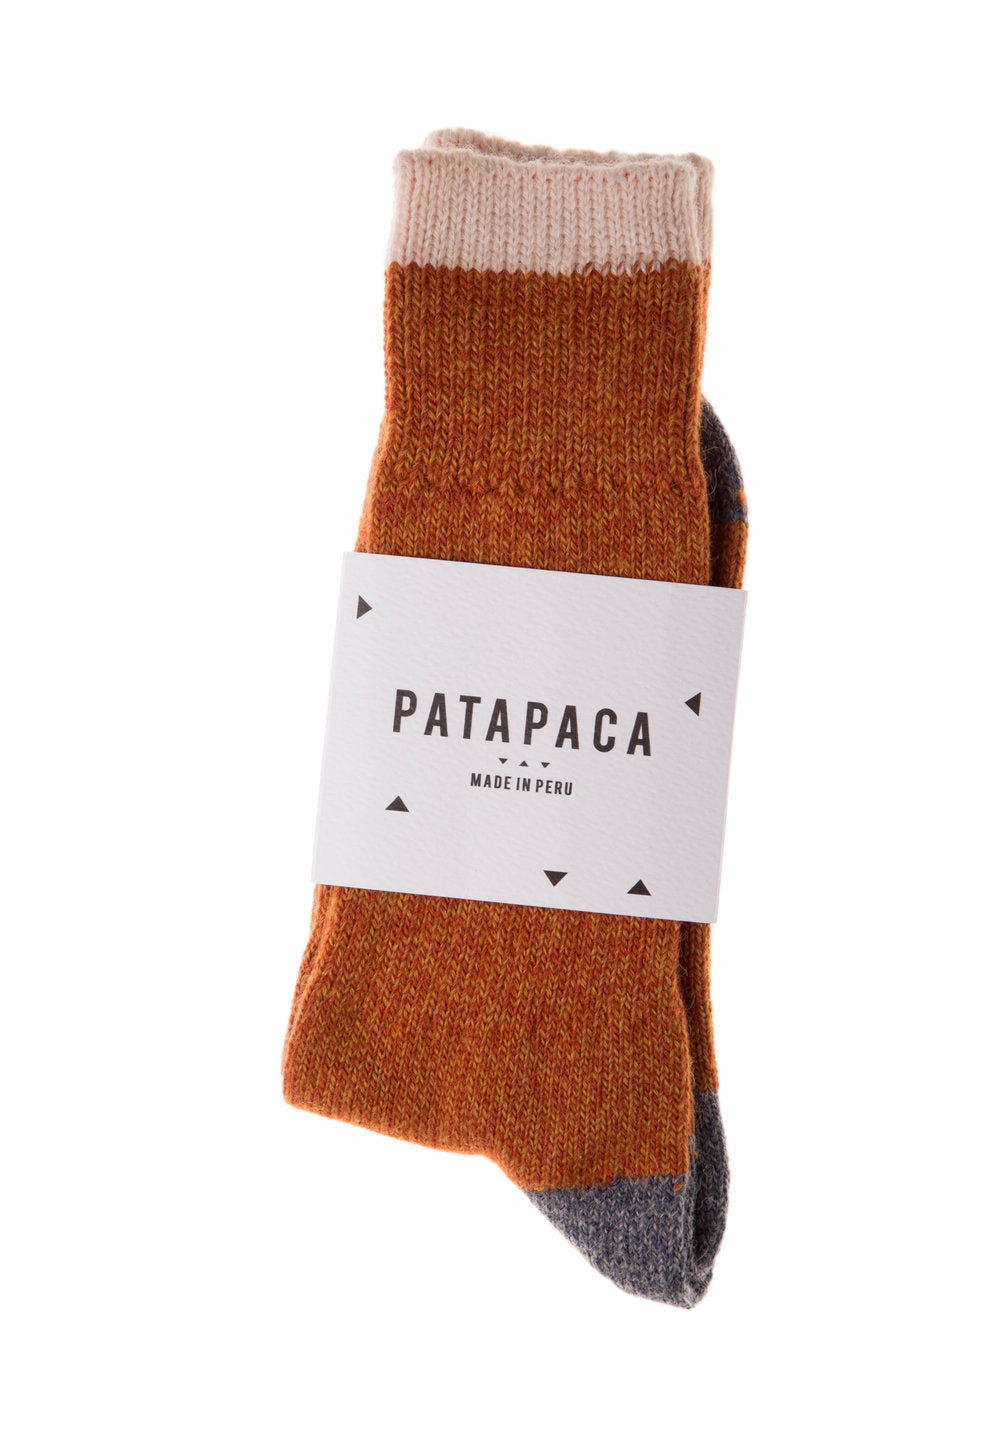 Patapaca - Sock Ladrillo Melange Orange